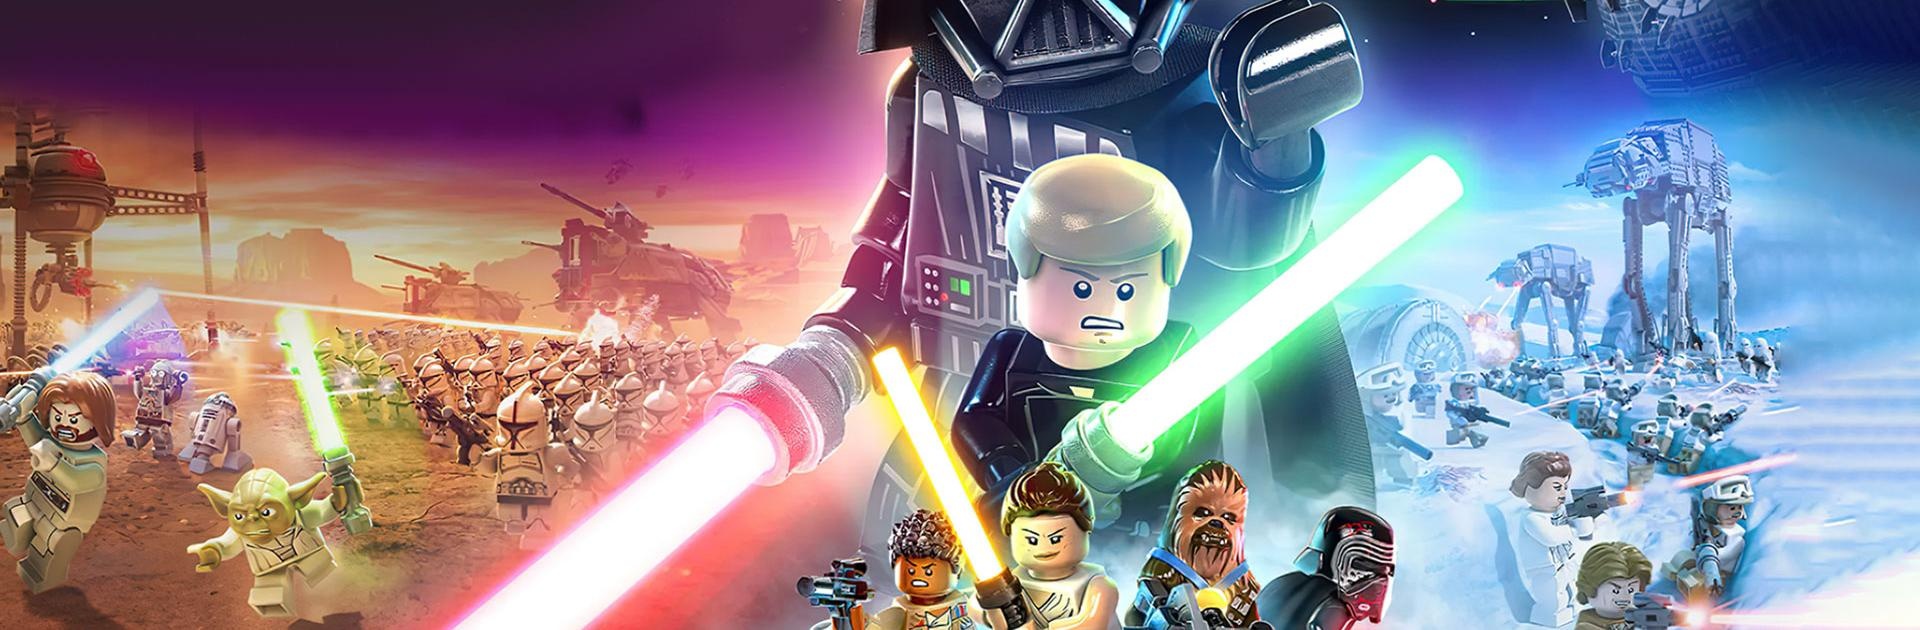 LEGO Star Wars: TFA